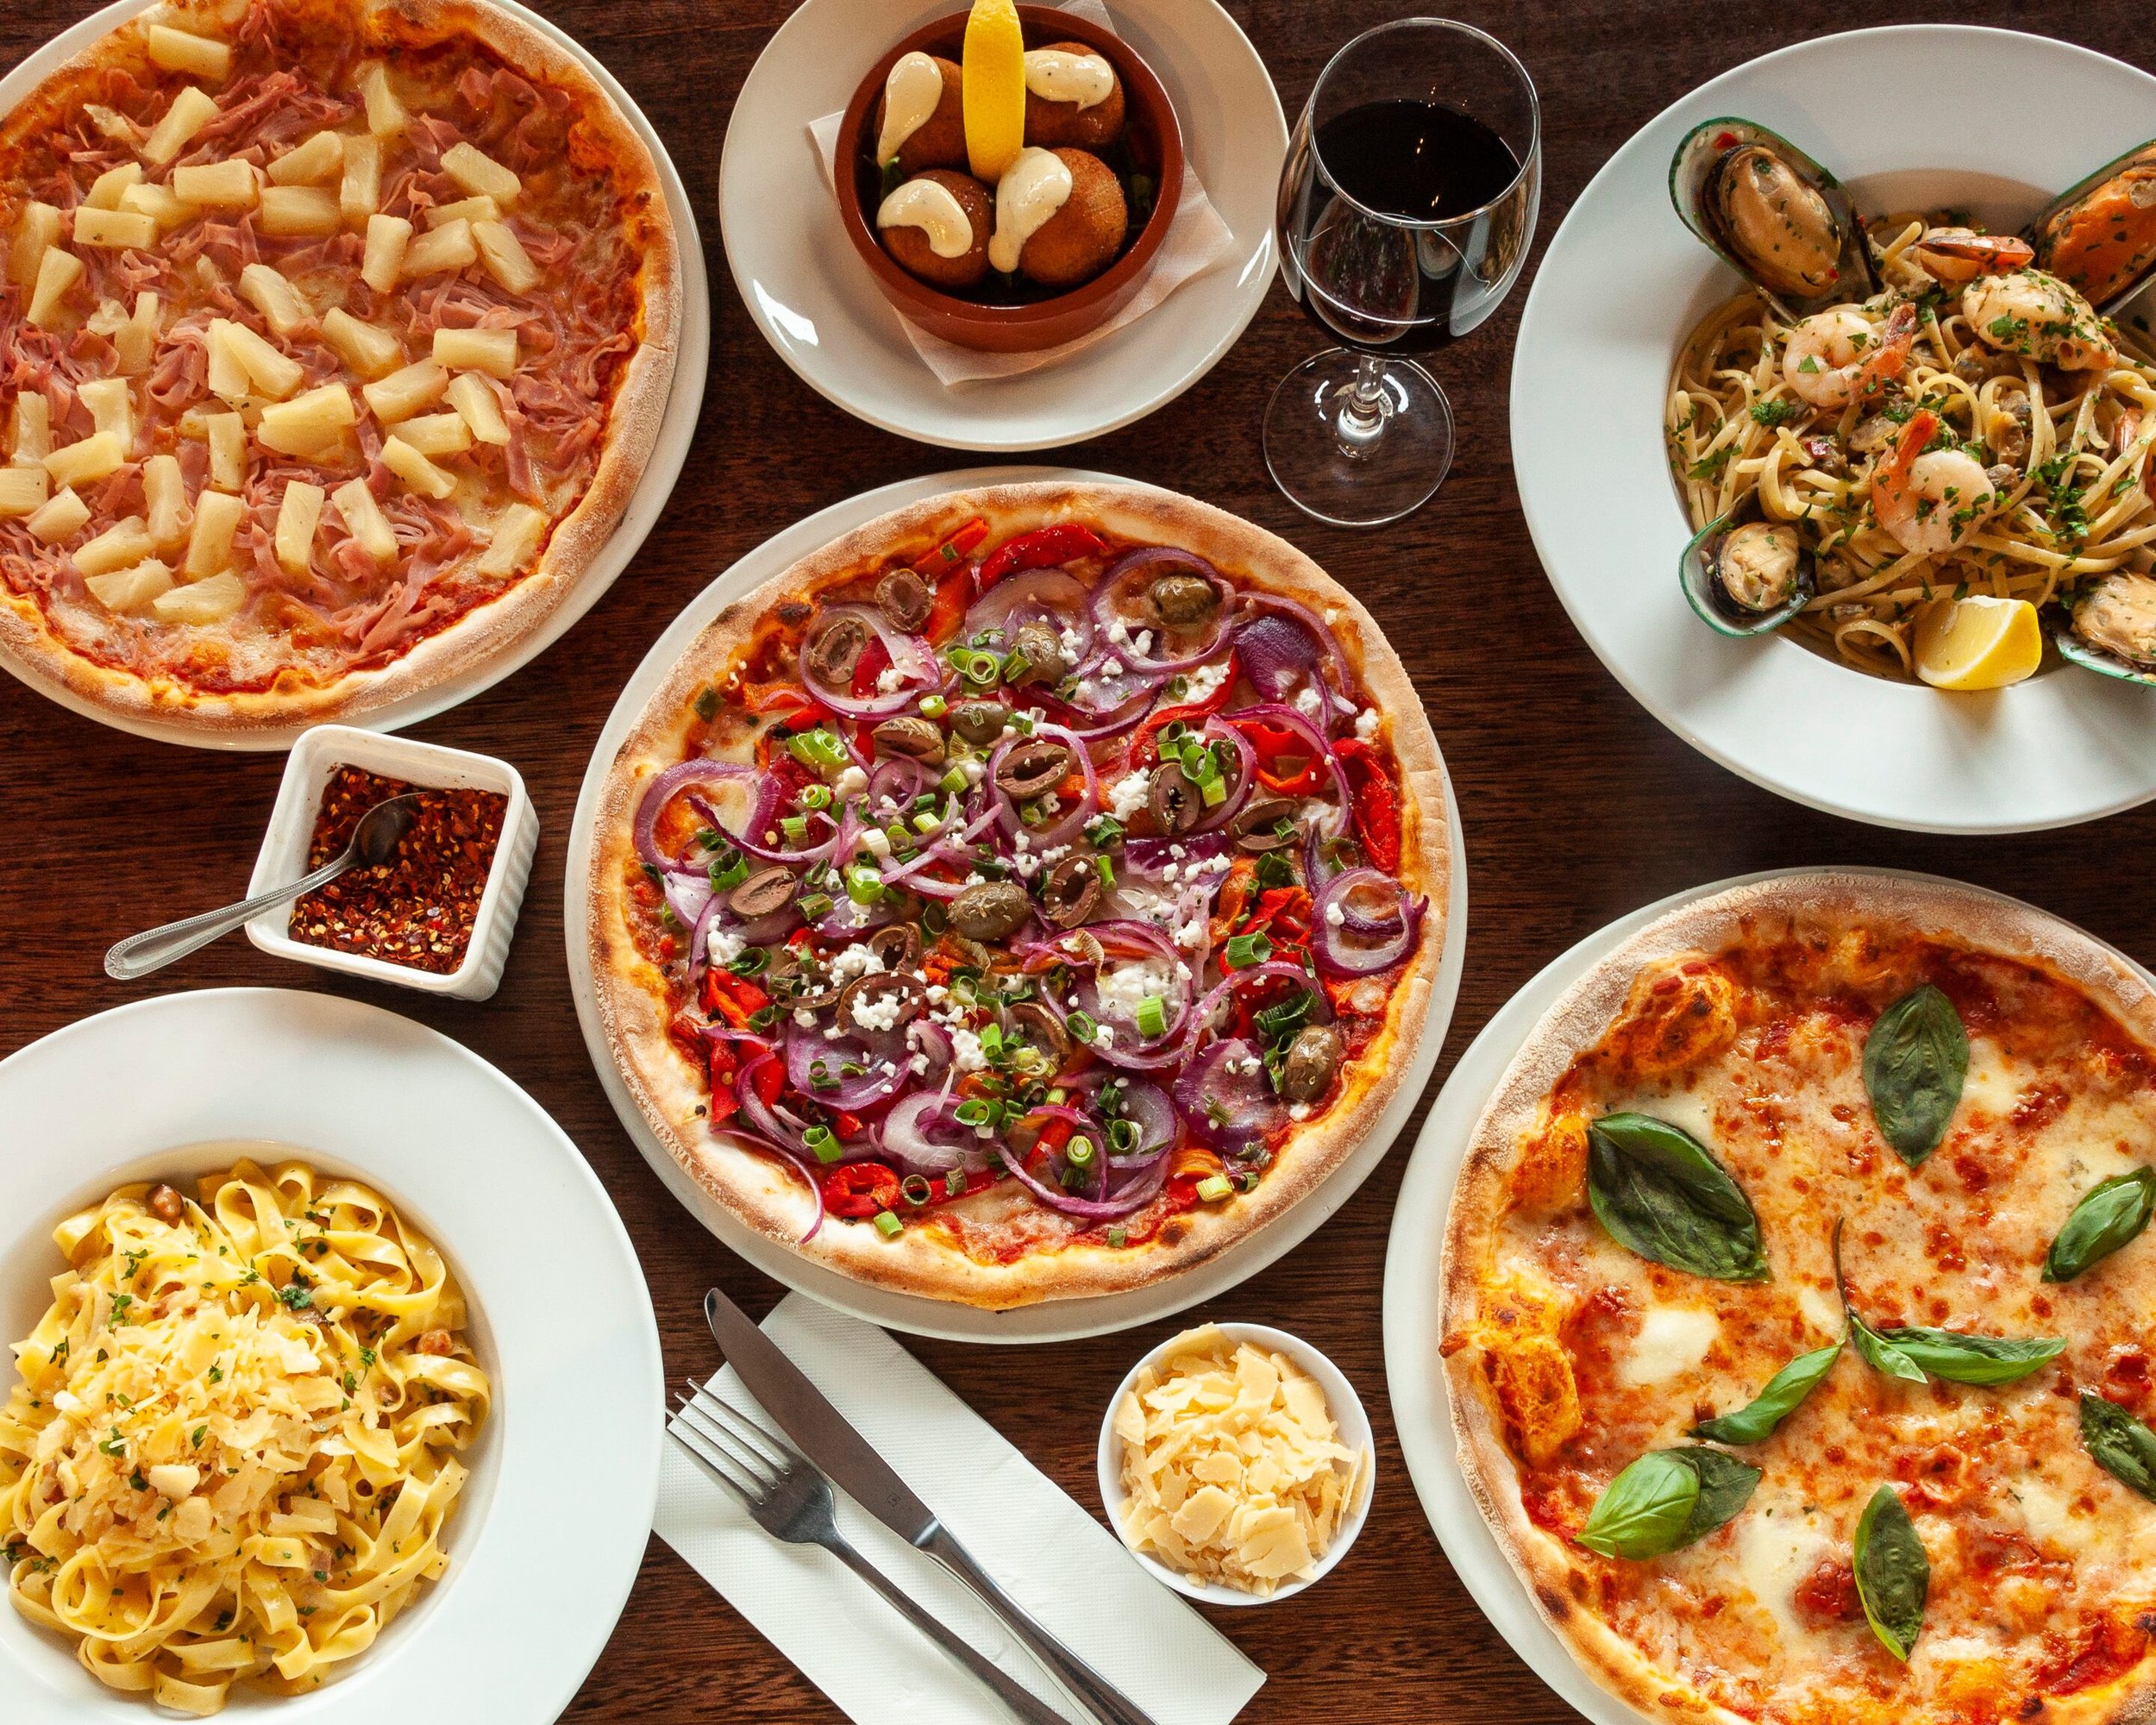 Pizza alongside other foods